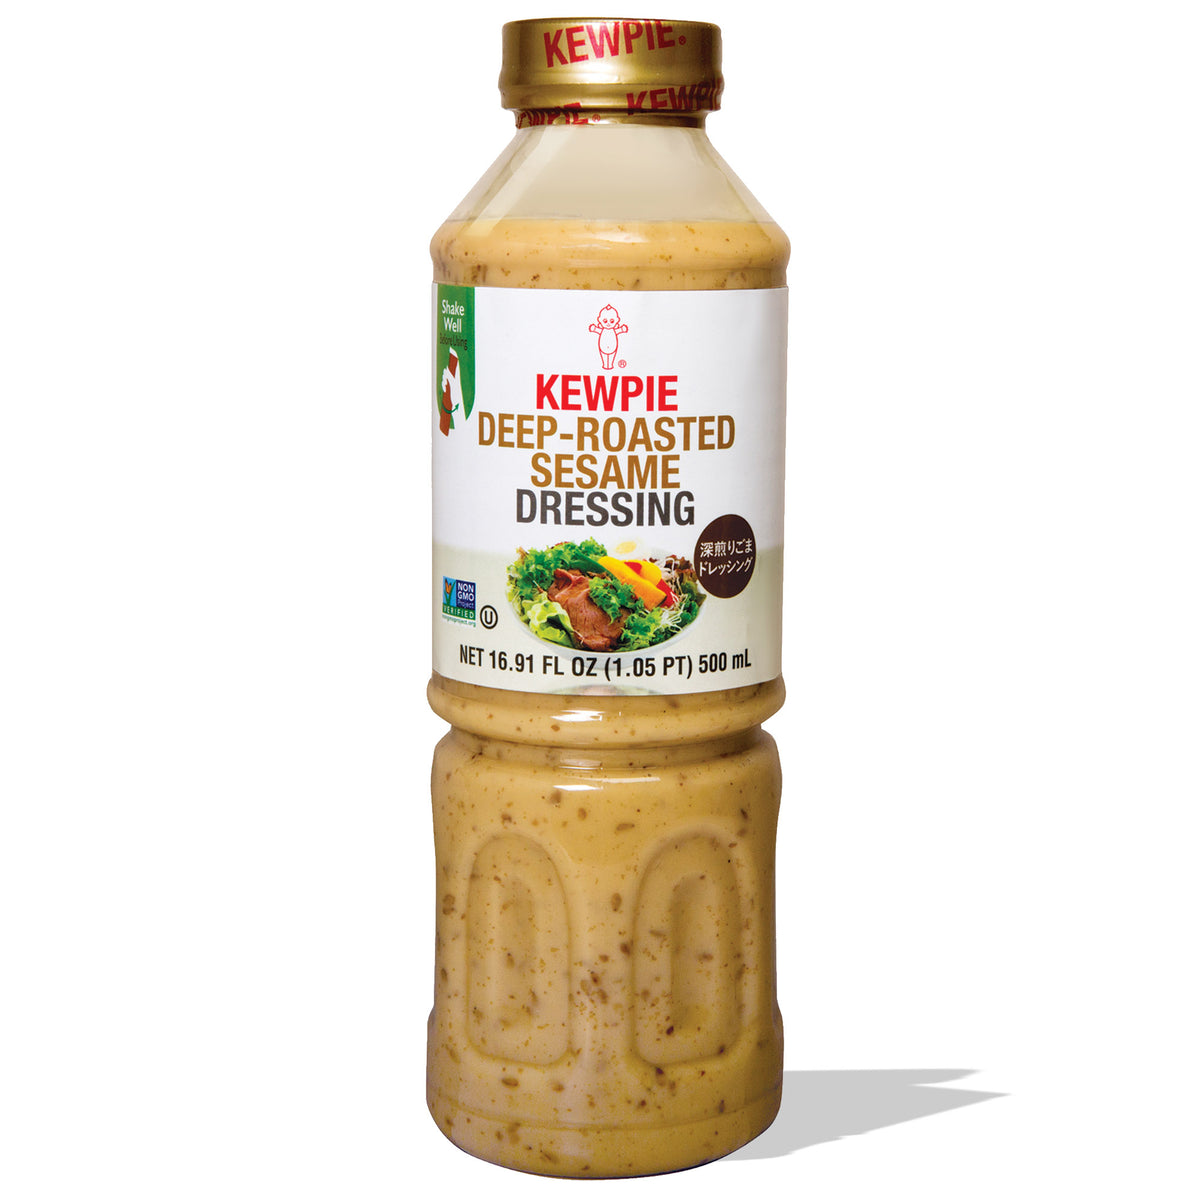 KEWPIE Mayonnaise, 500 g (Product of Japan) — Q&B Foods